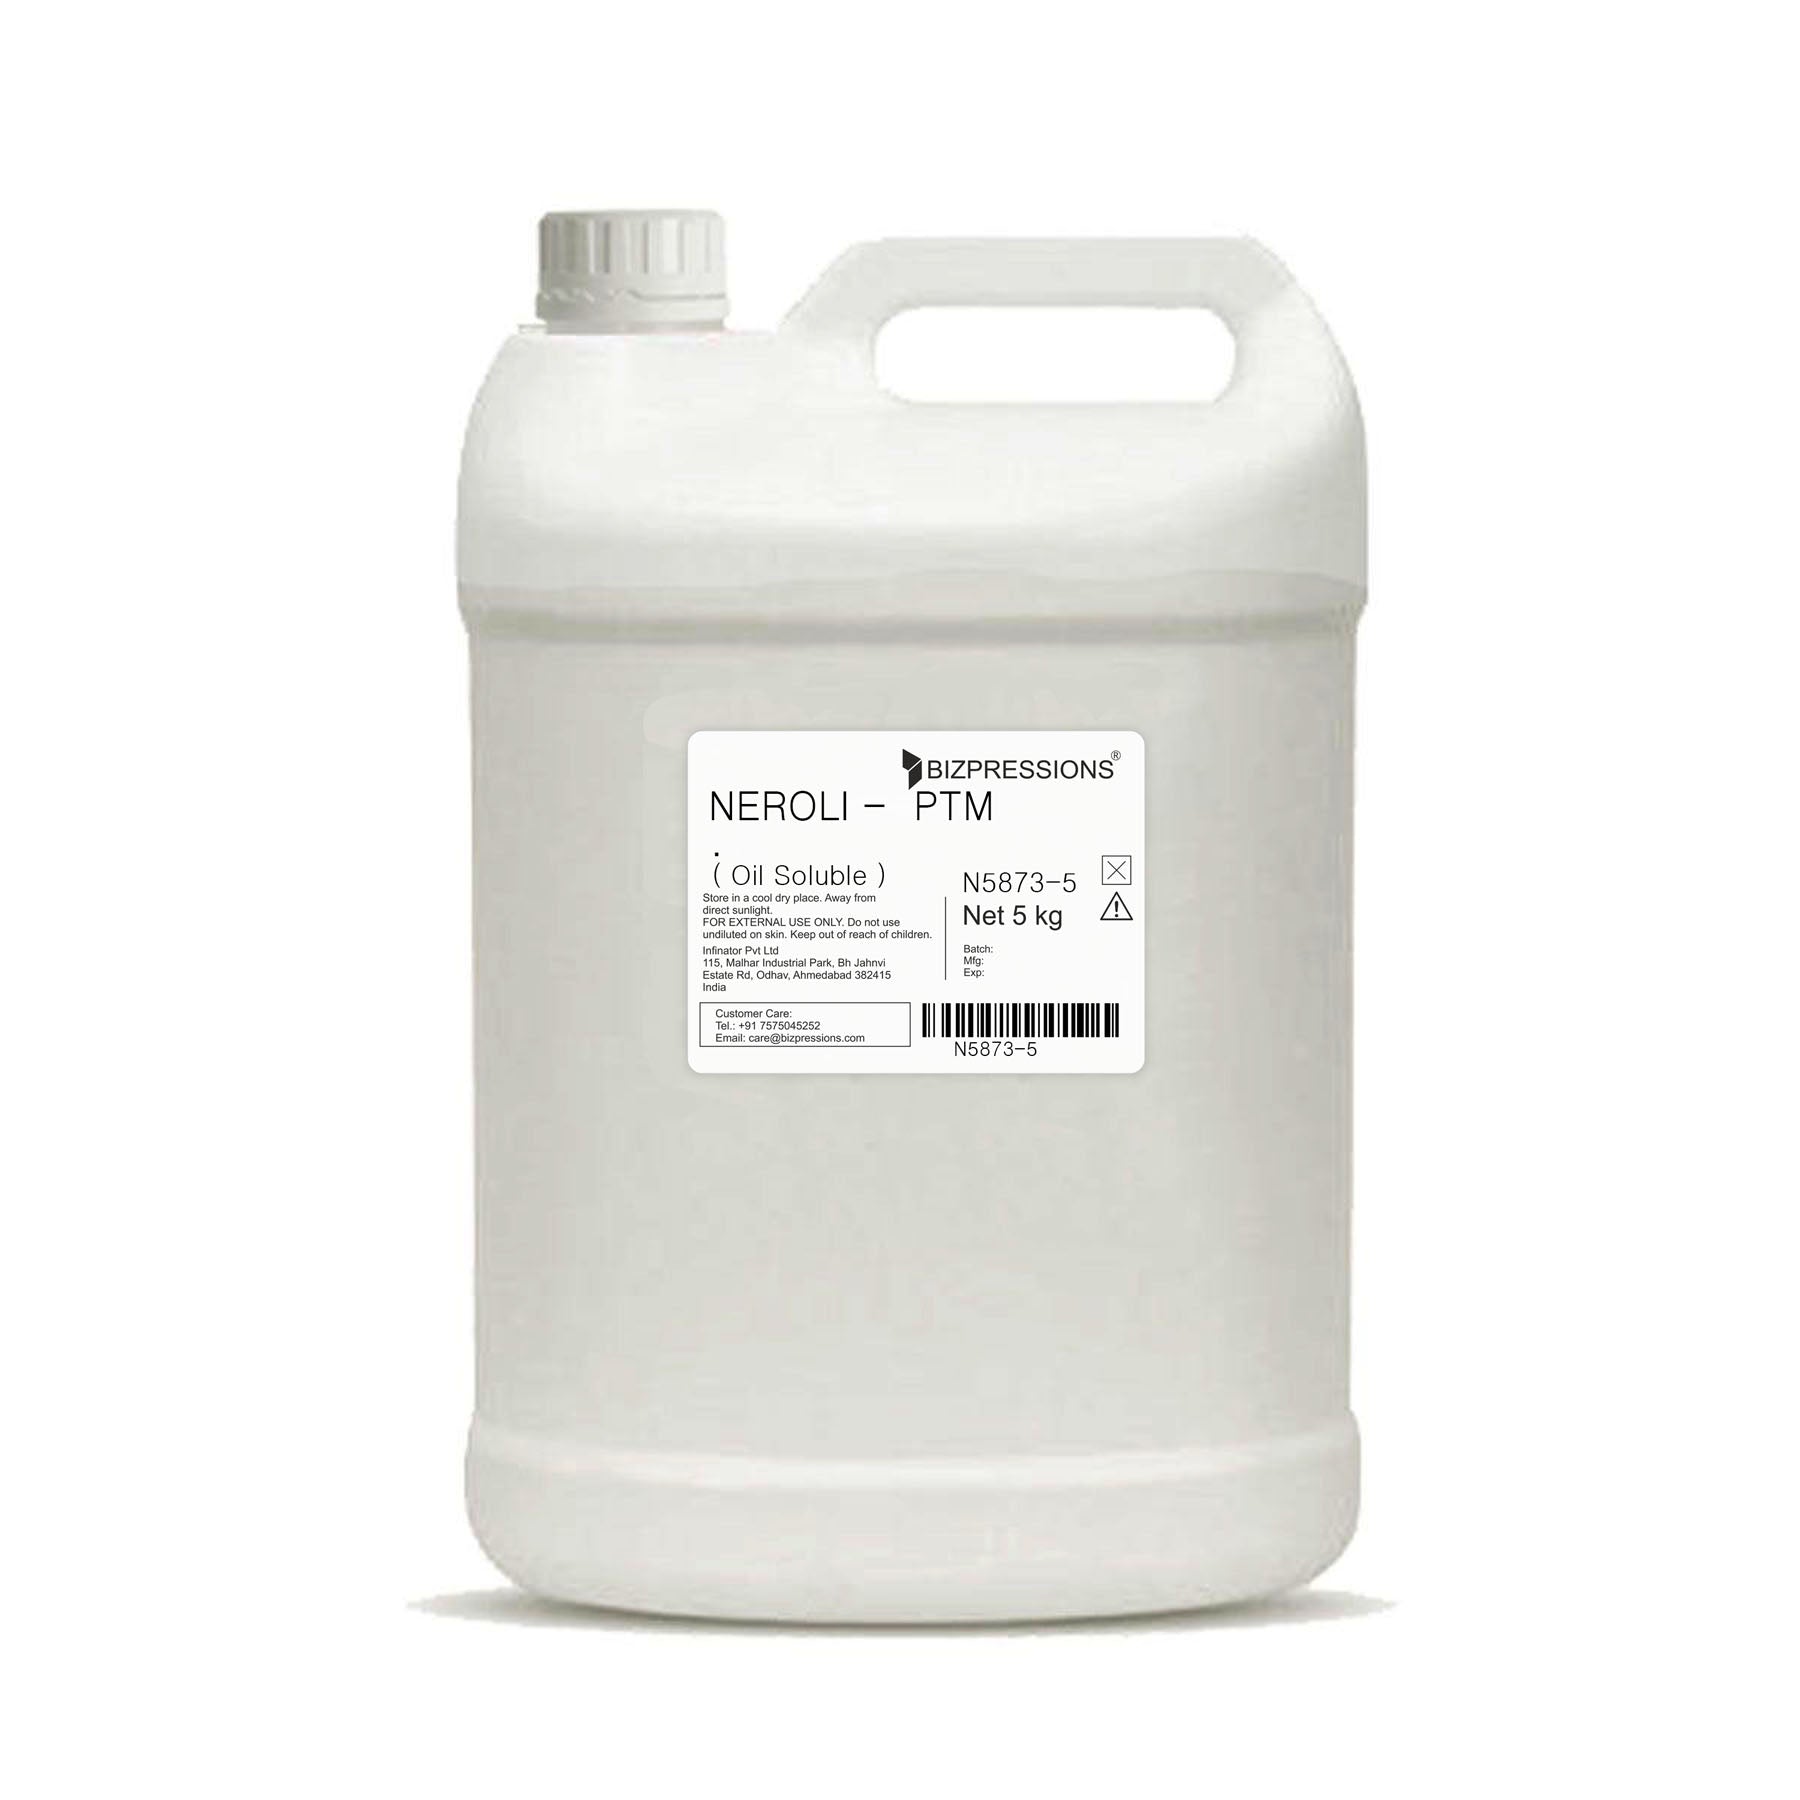 NEROLI - PTM - Fragrance ( Oil Soluble ) - 5 kg